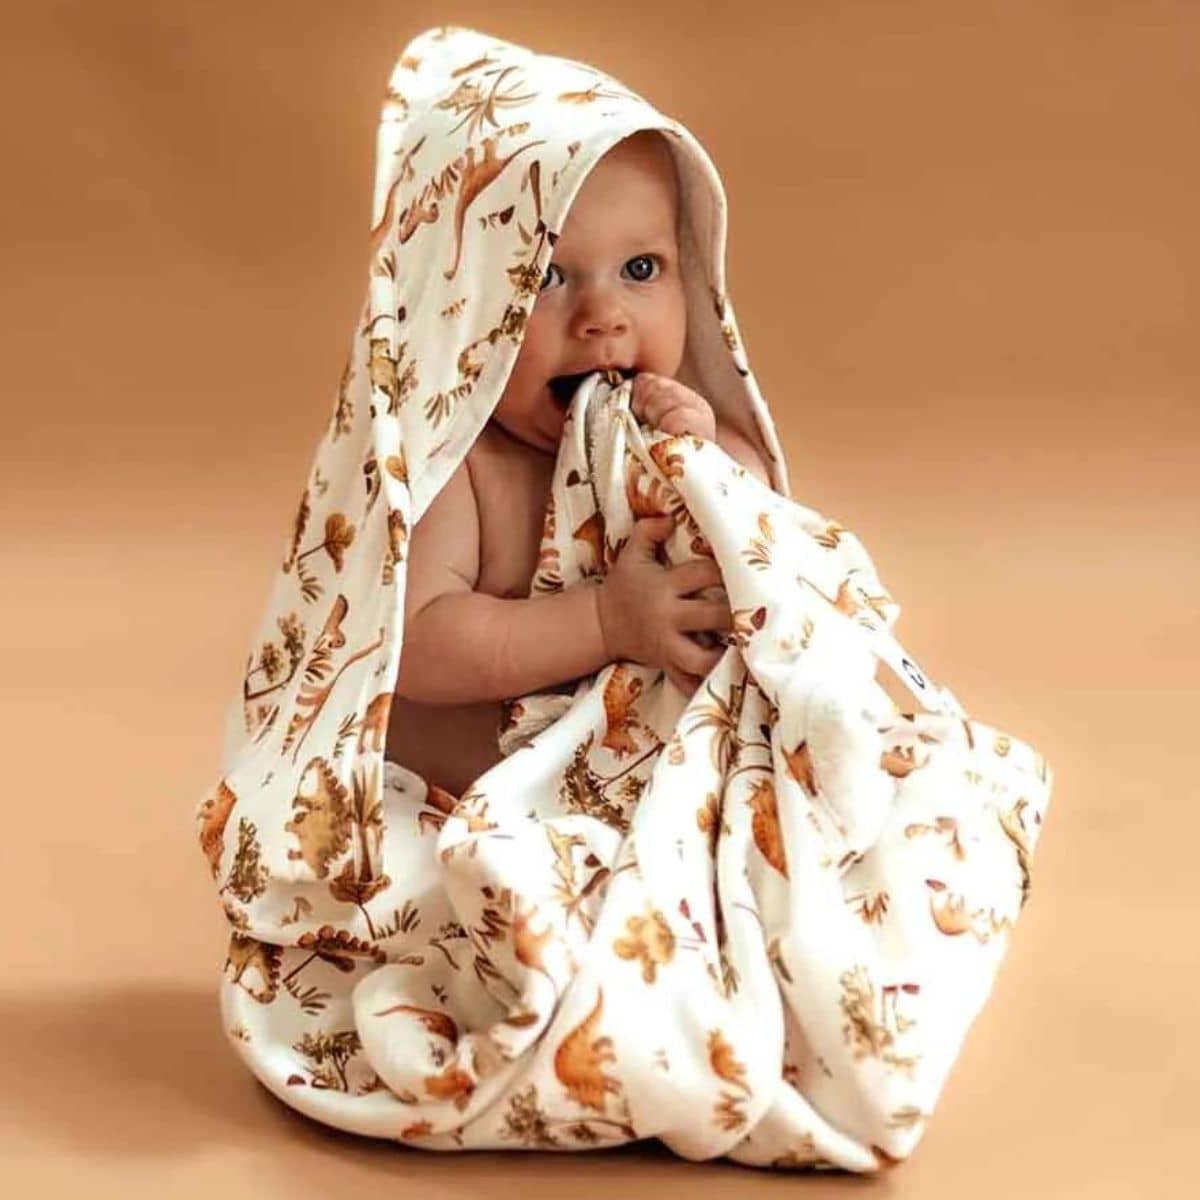 Snuggle Hunny Organic Hooded Baby Towel - Dino